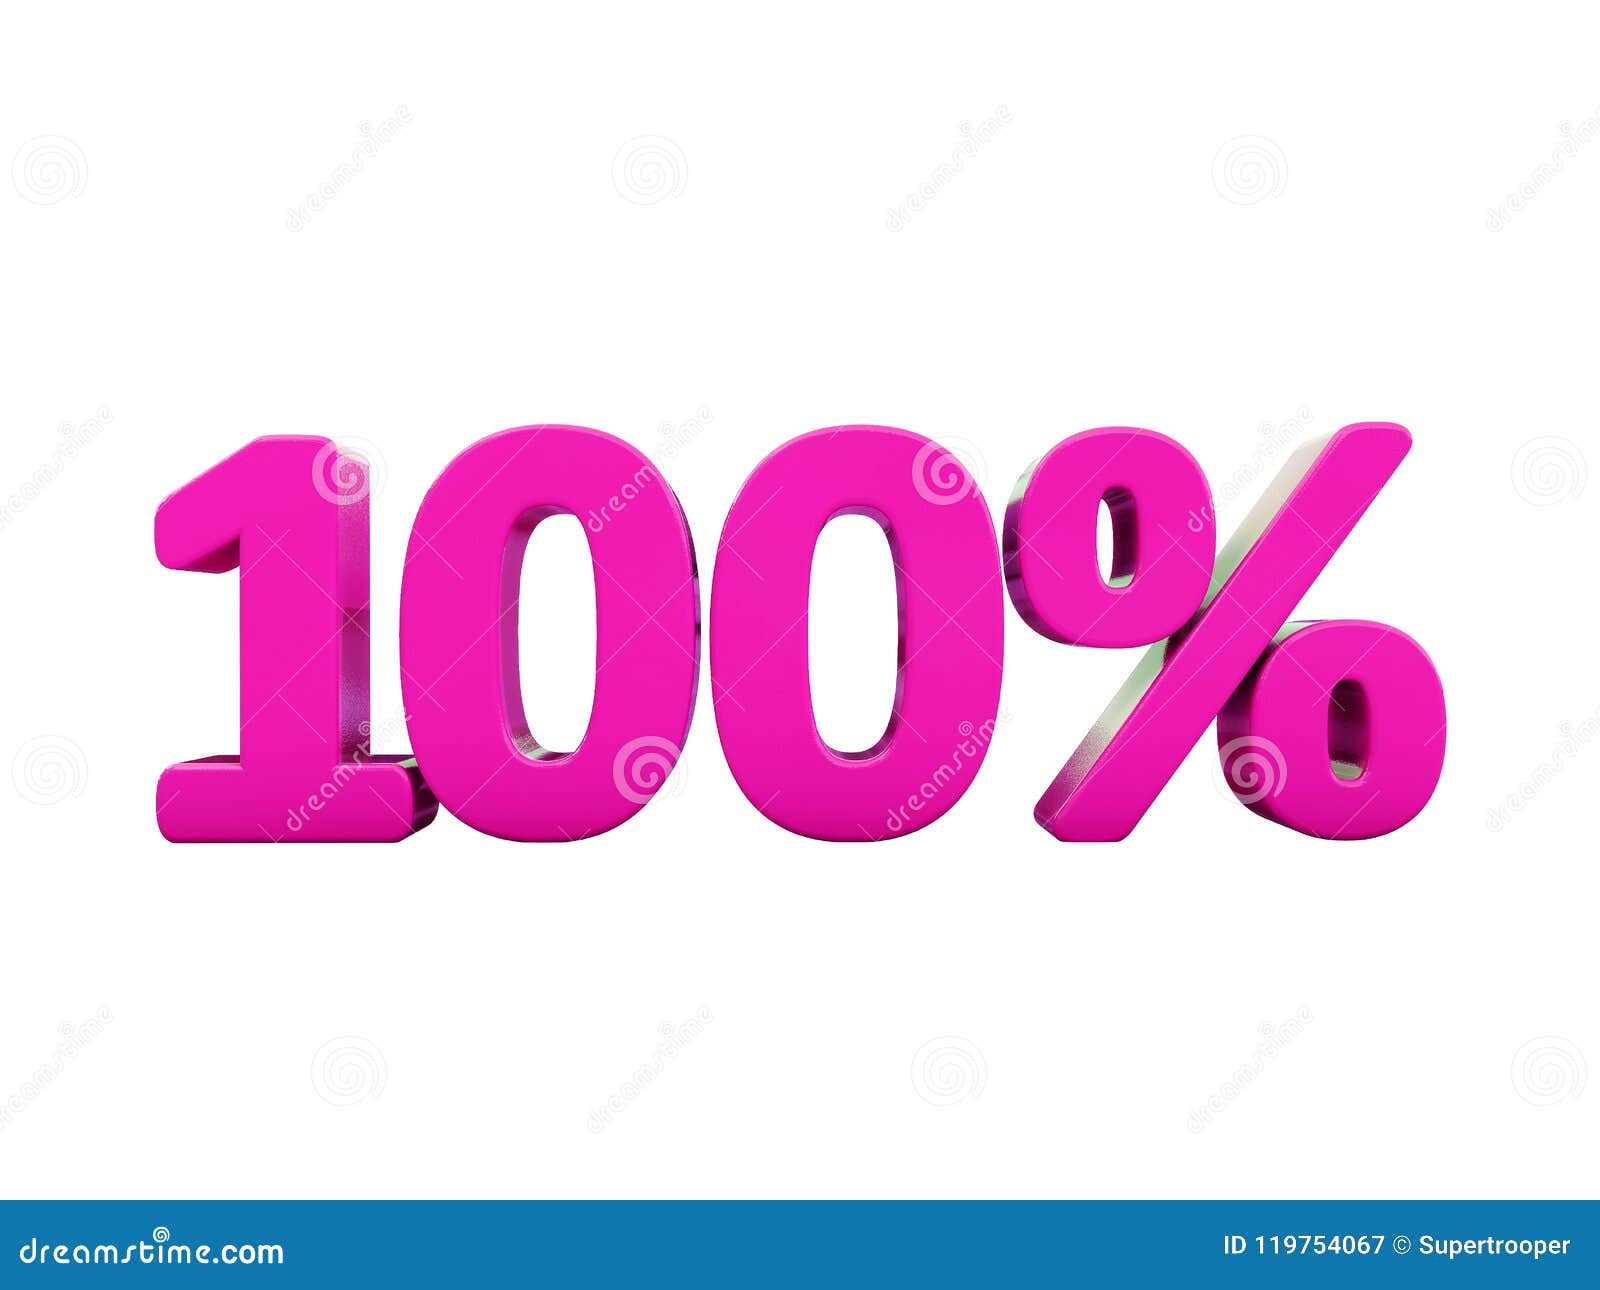 100 Percent Pink Sign stock illustration. Illustration of mathematics ...
